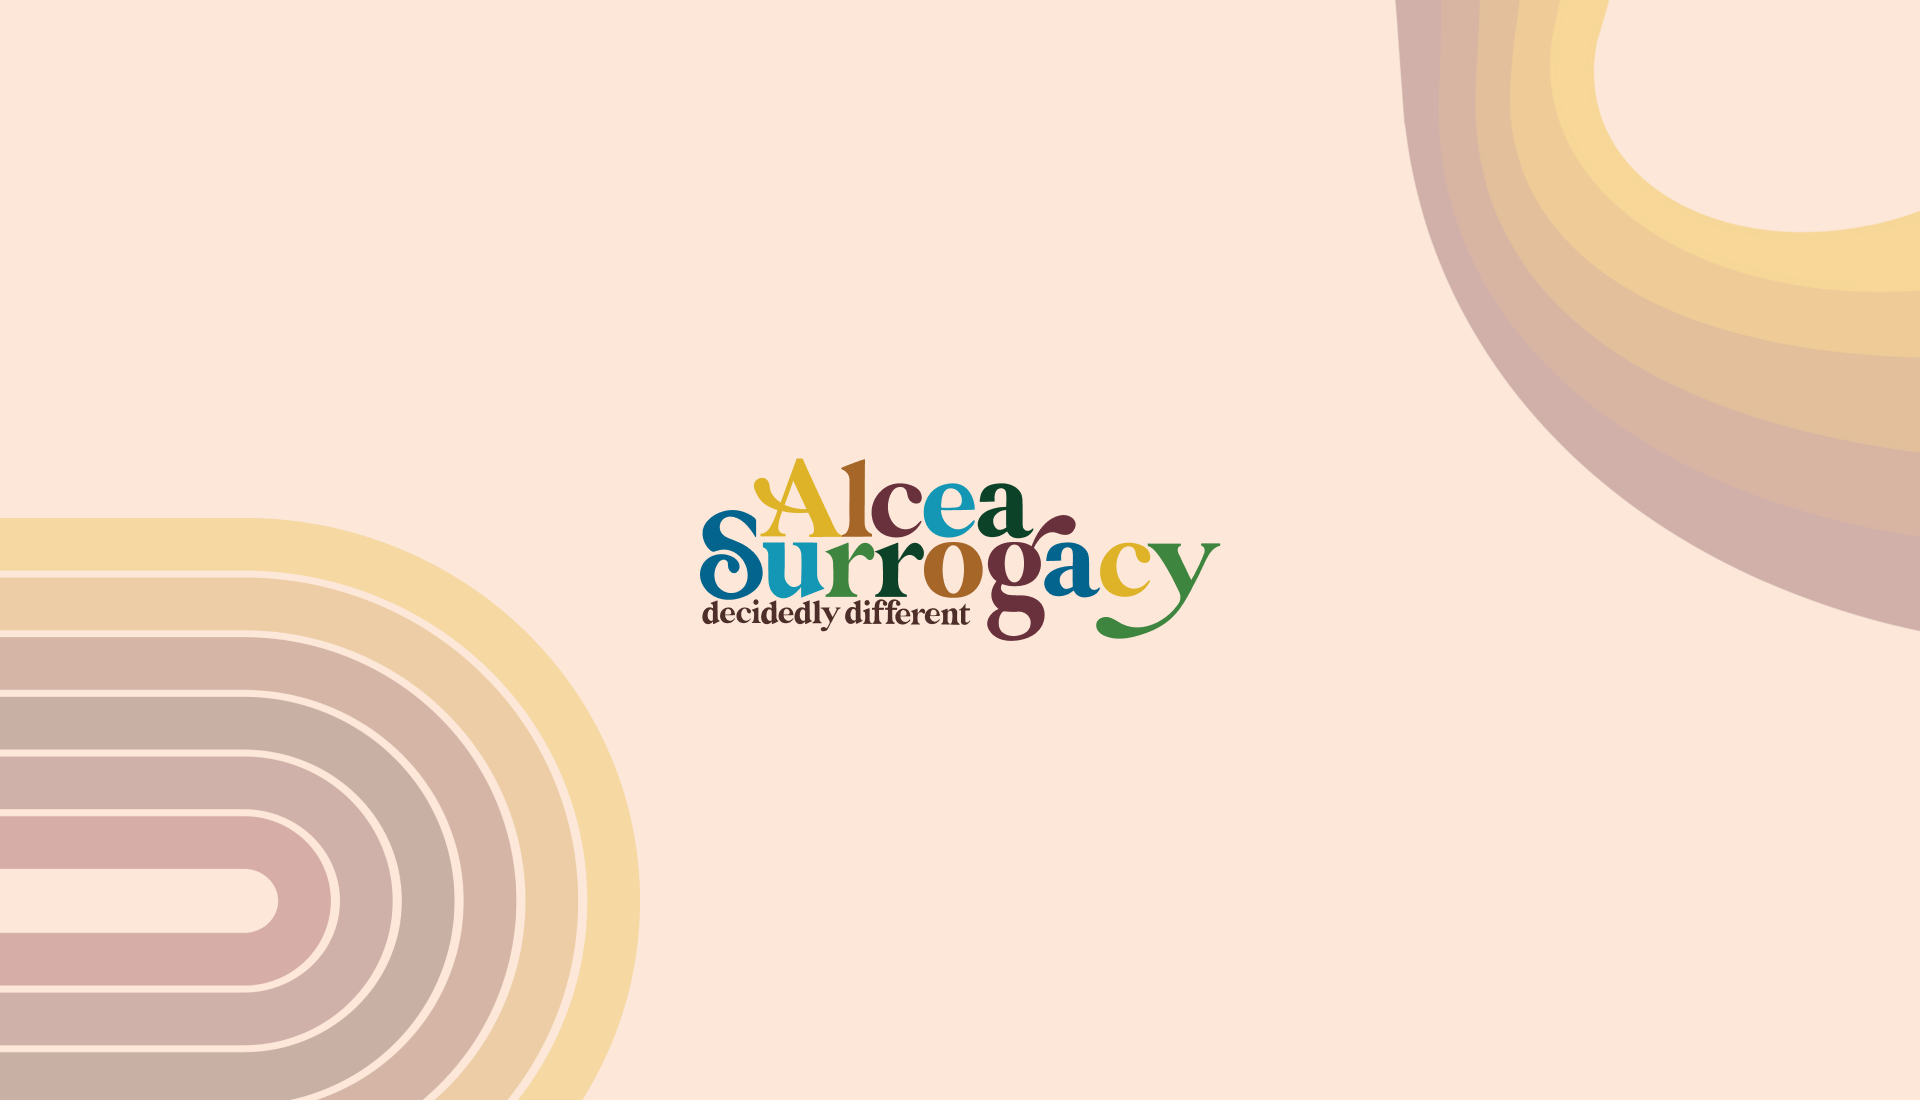 Alcea Surrogacy